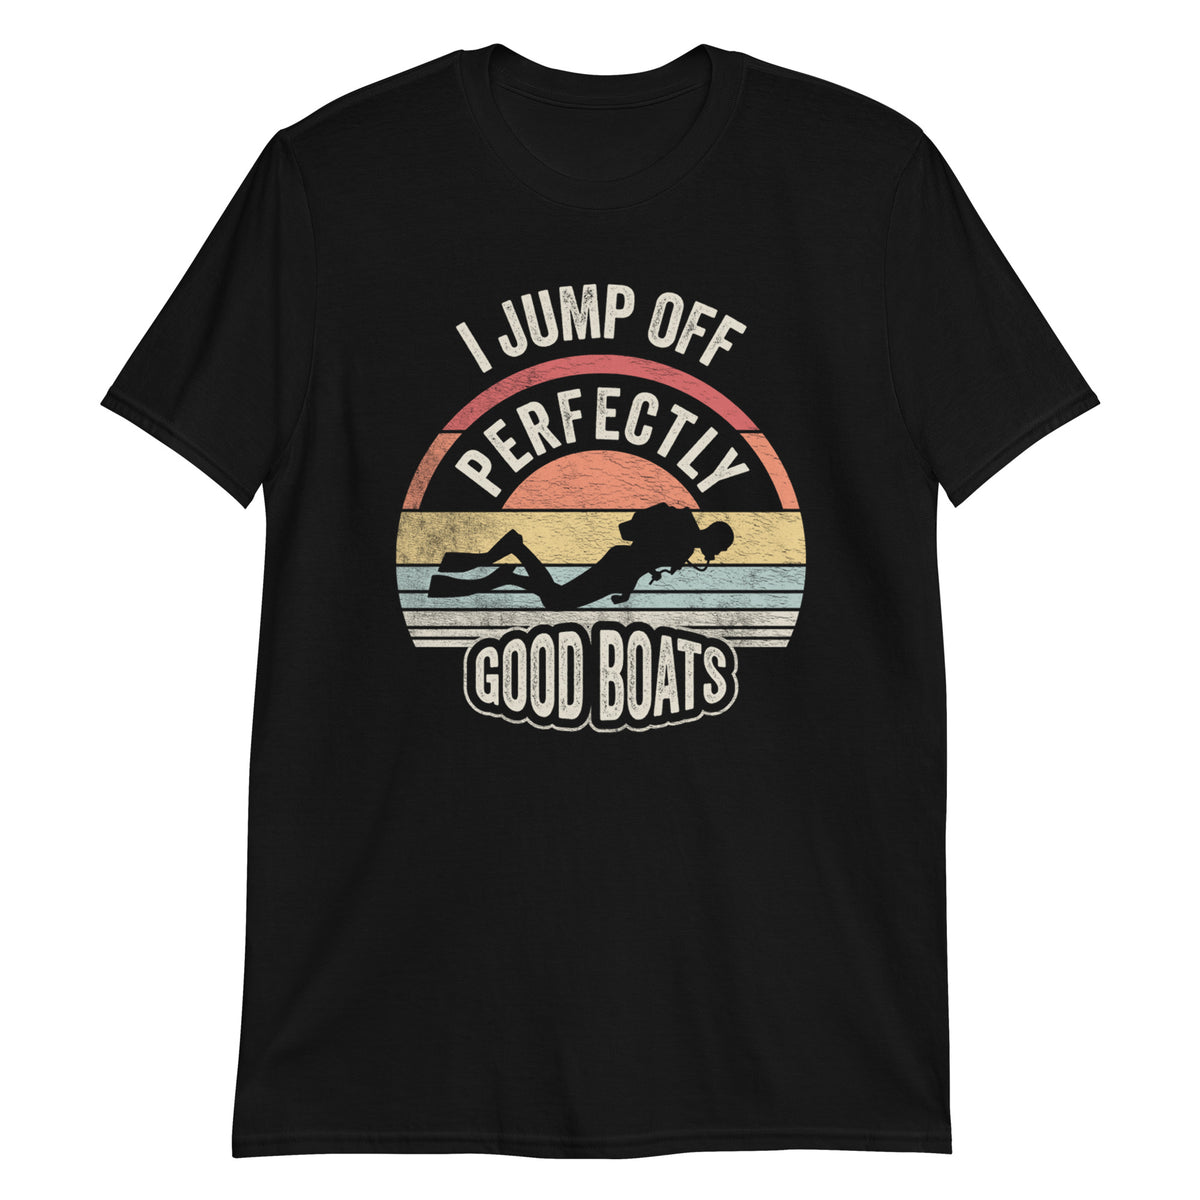 I Jump off Perfectly Good Boats T-Shirt